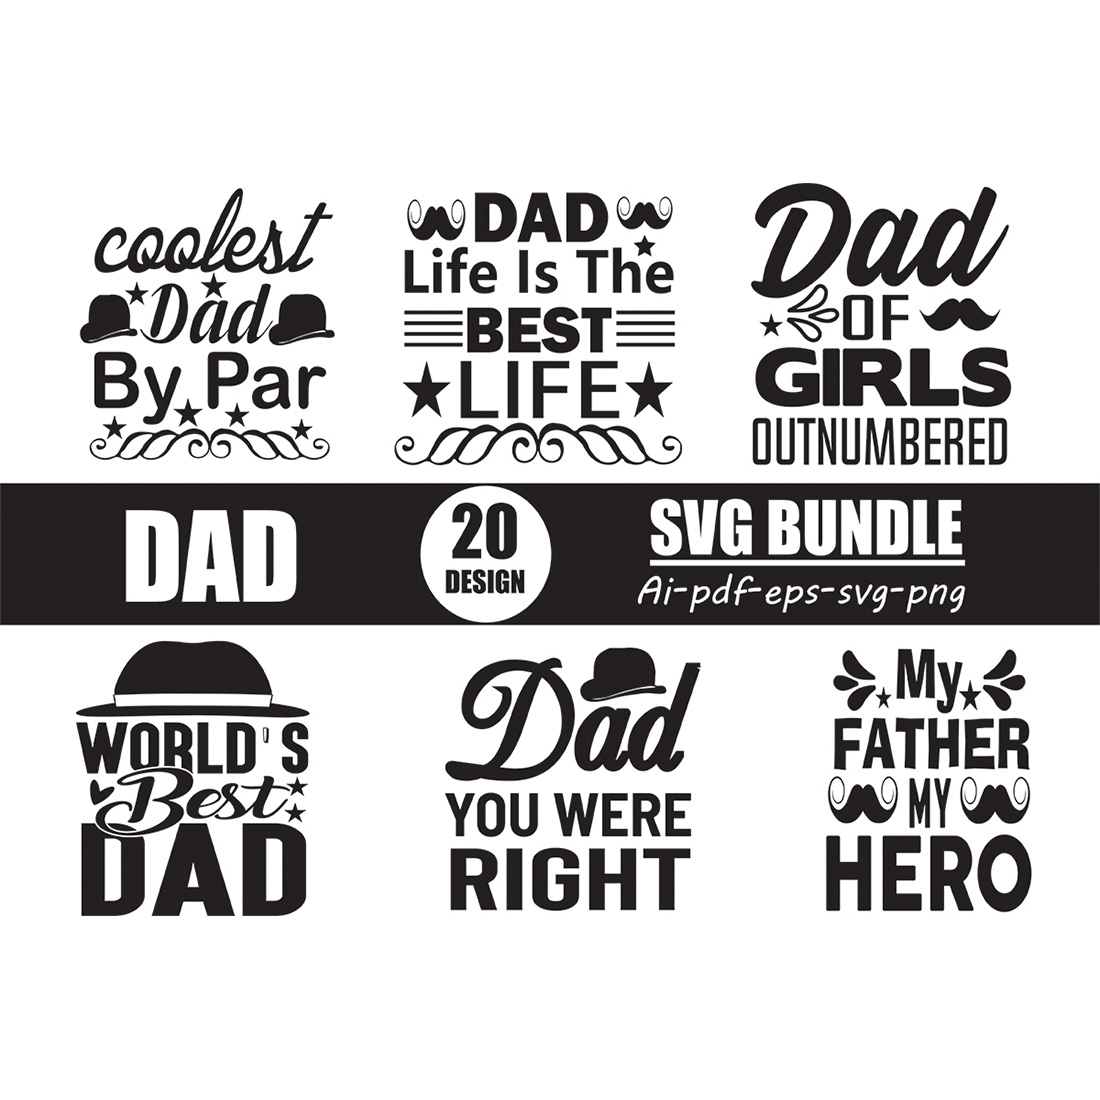 Dad SVG Designs Bundle main cover image.